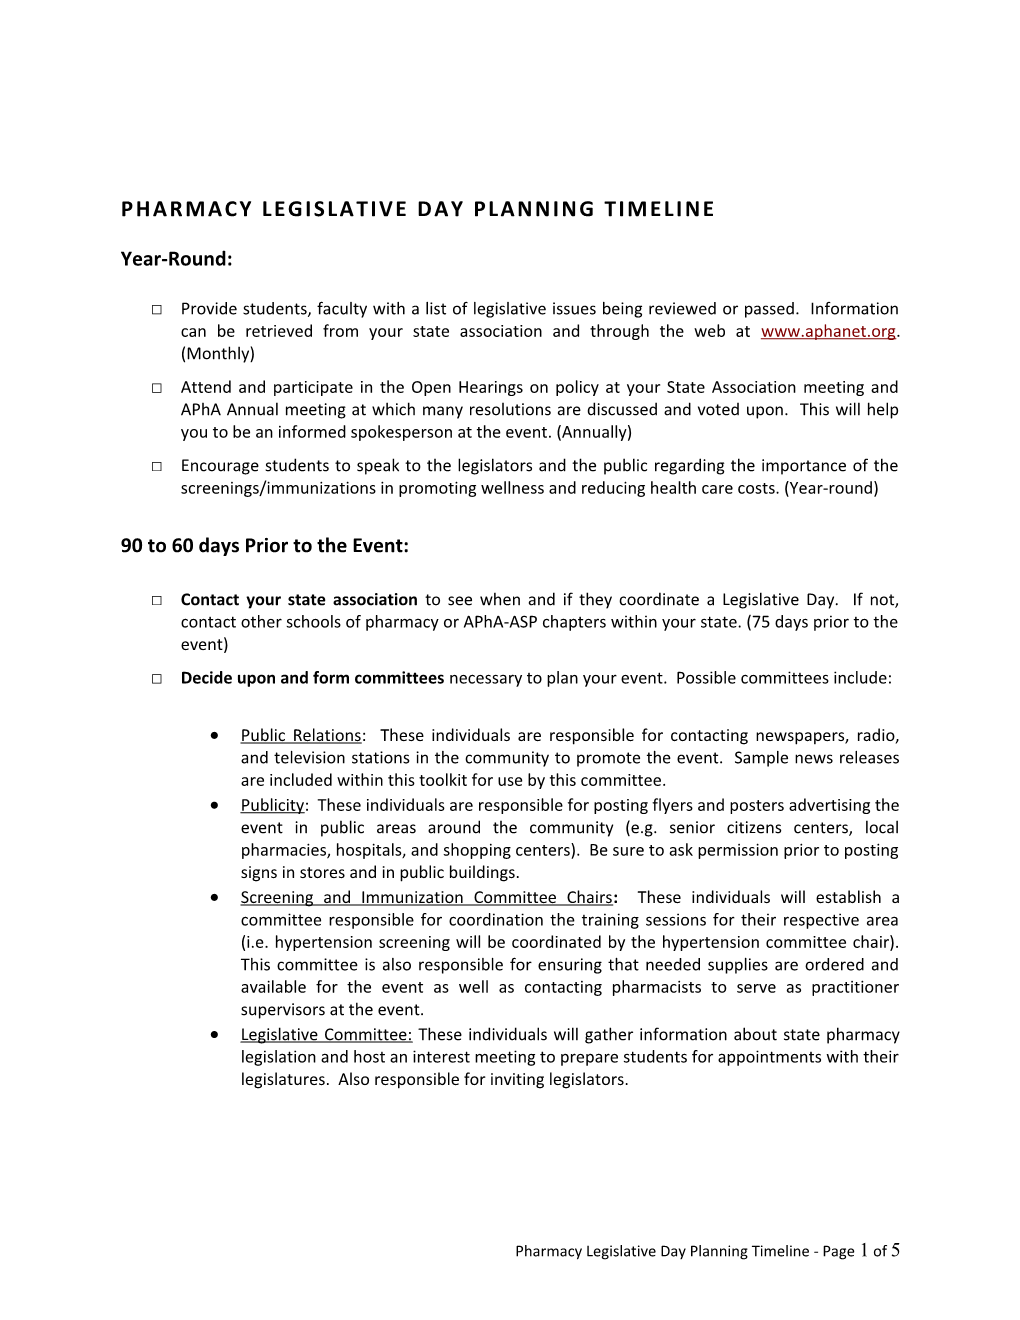 Pharmacy Legislative Day Planning Timeline